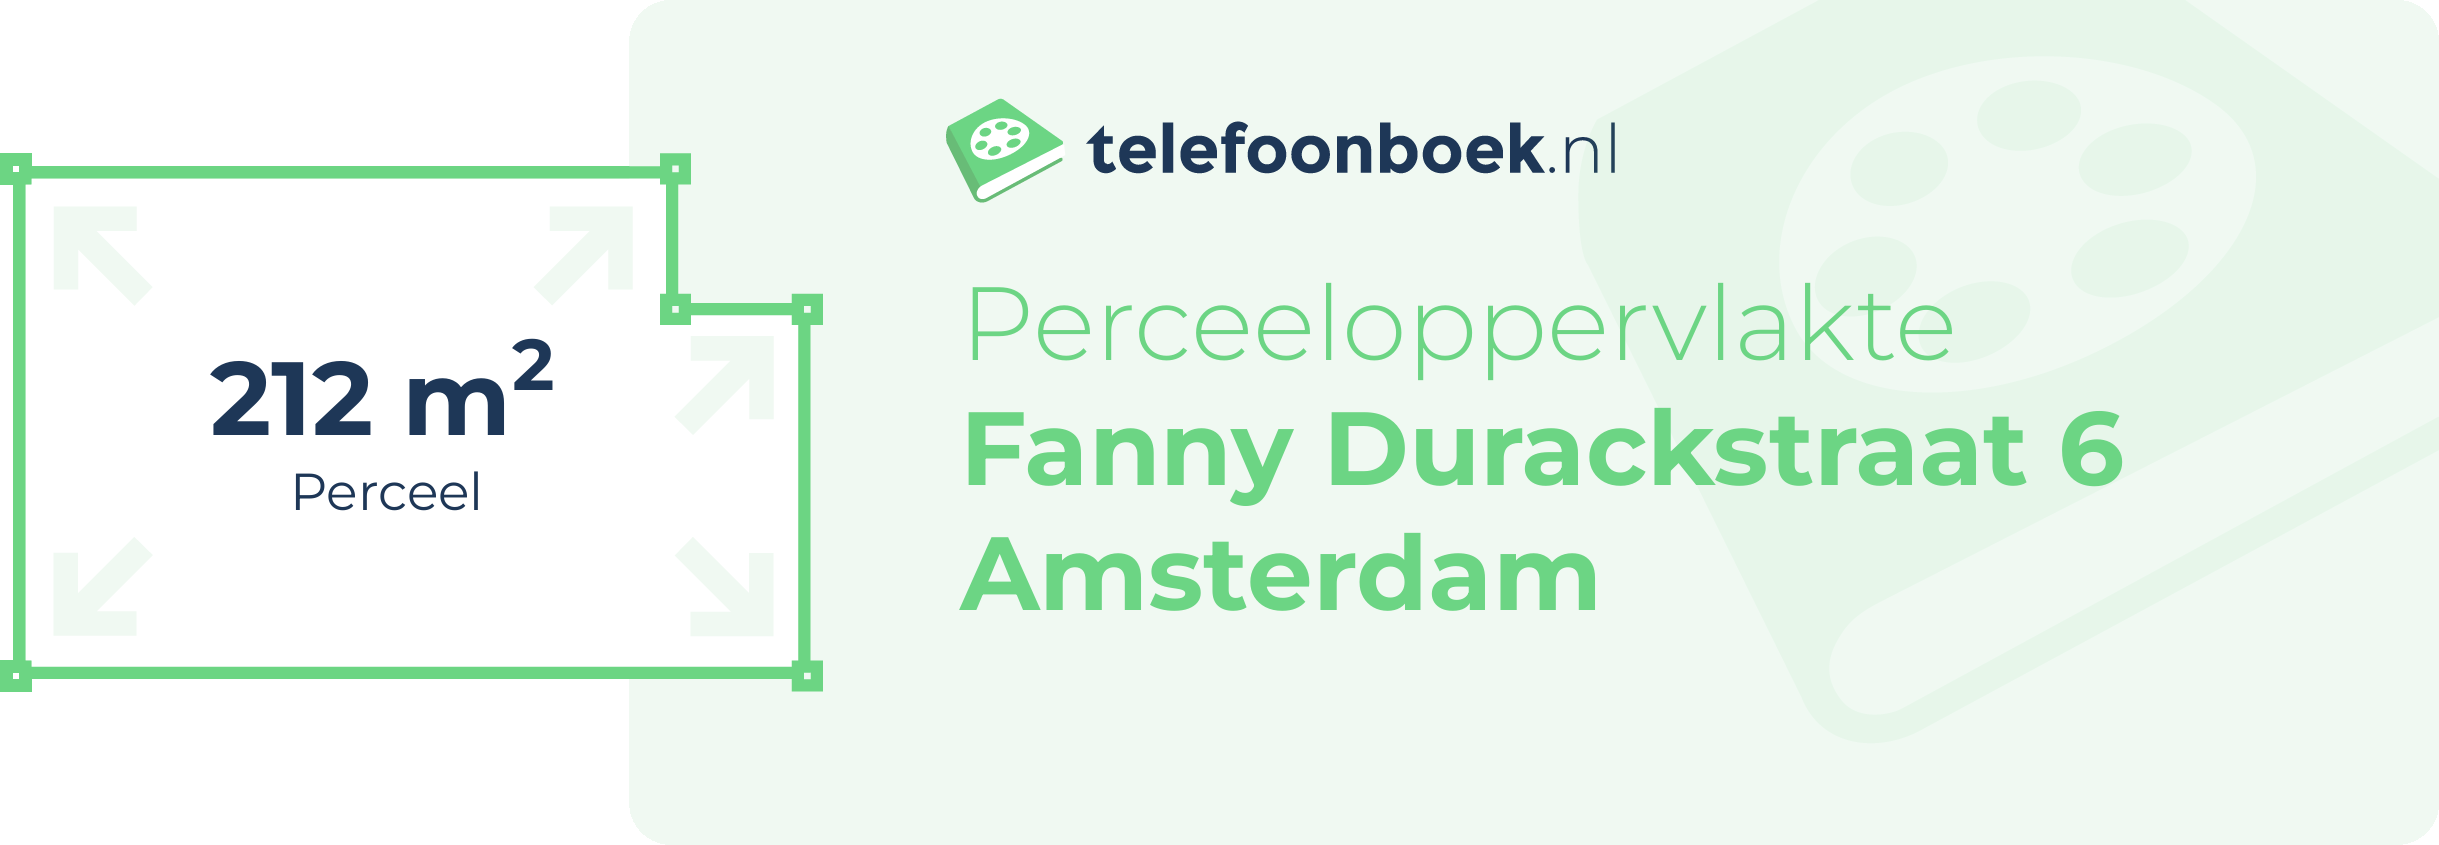 Perceeloppervlakte Fanny Durackstraat 6 Amsterdam